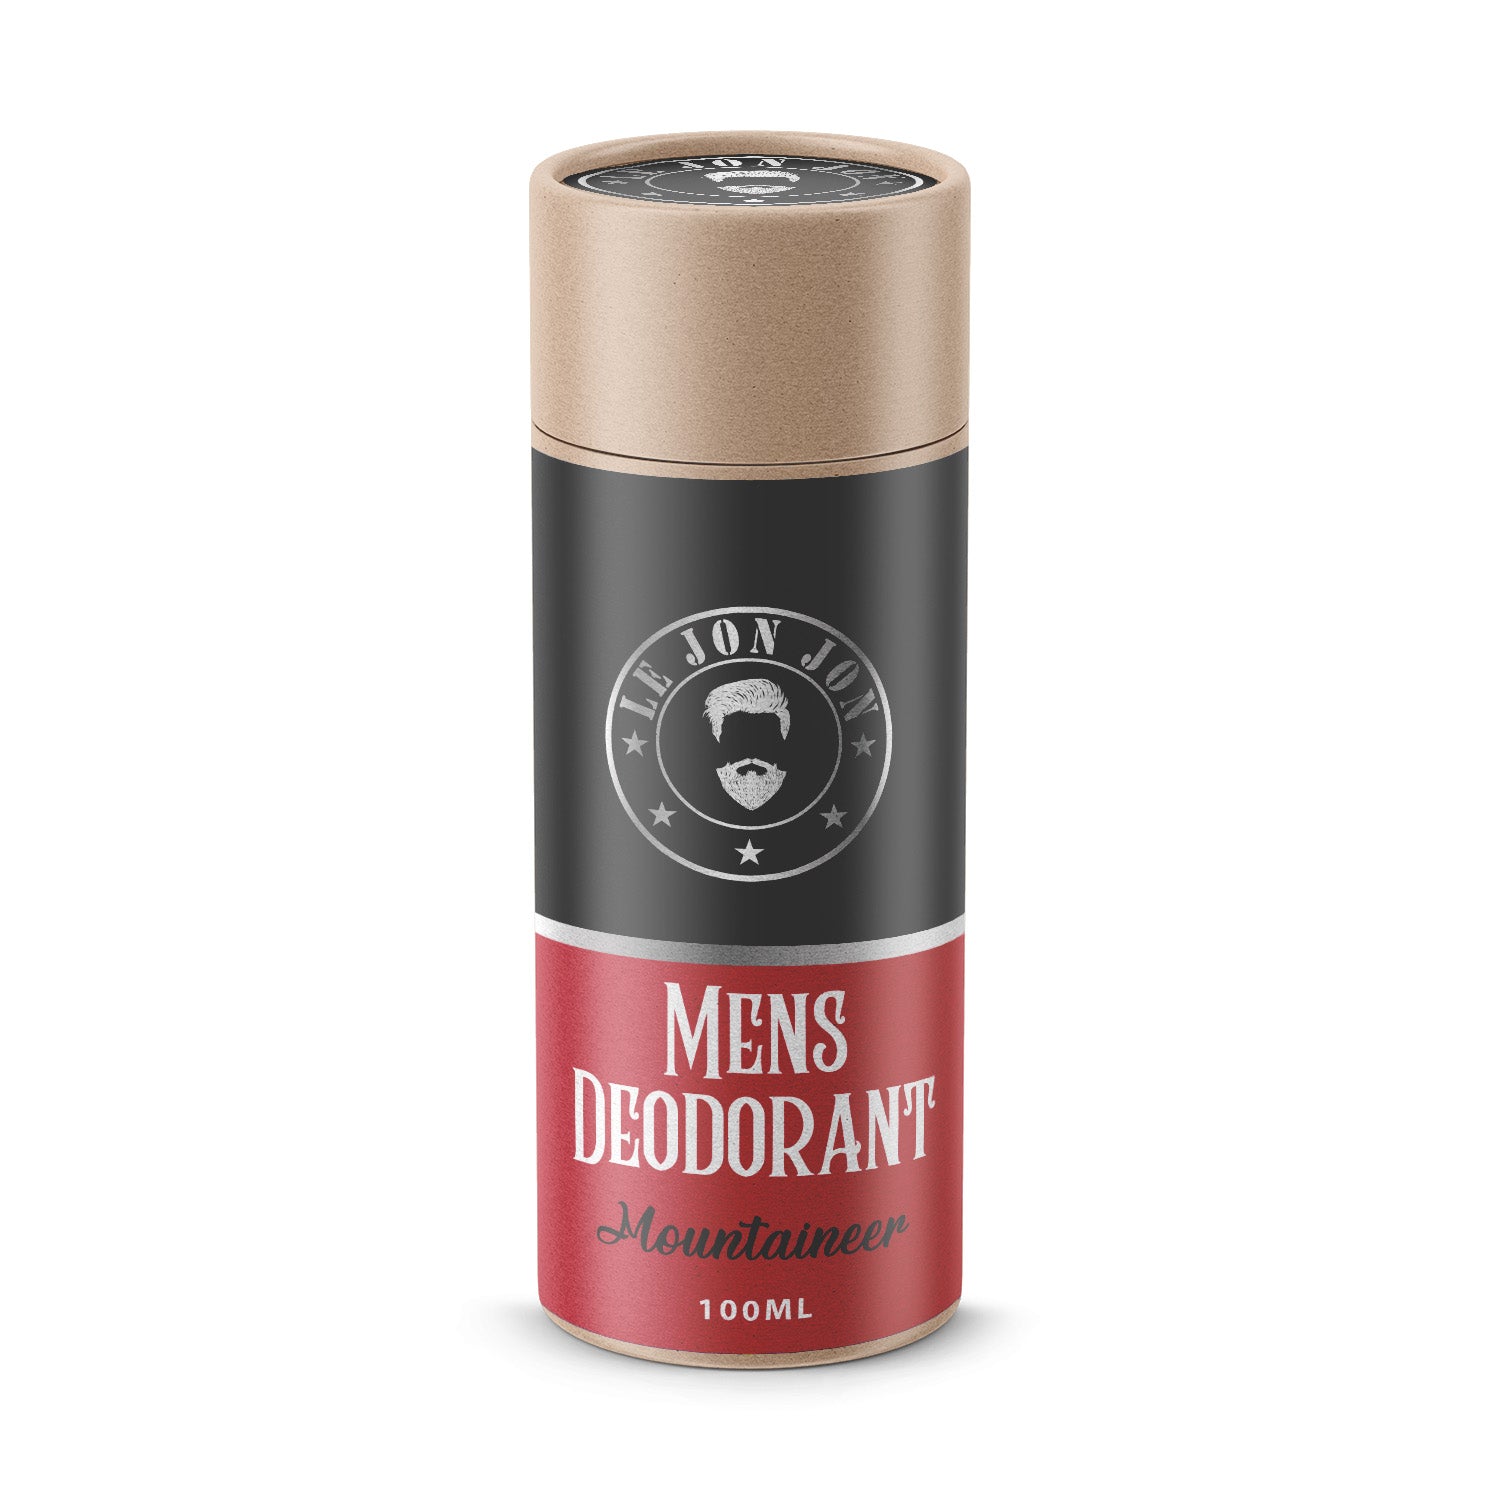 Mountaineer scented deodorant